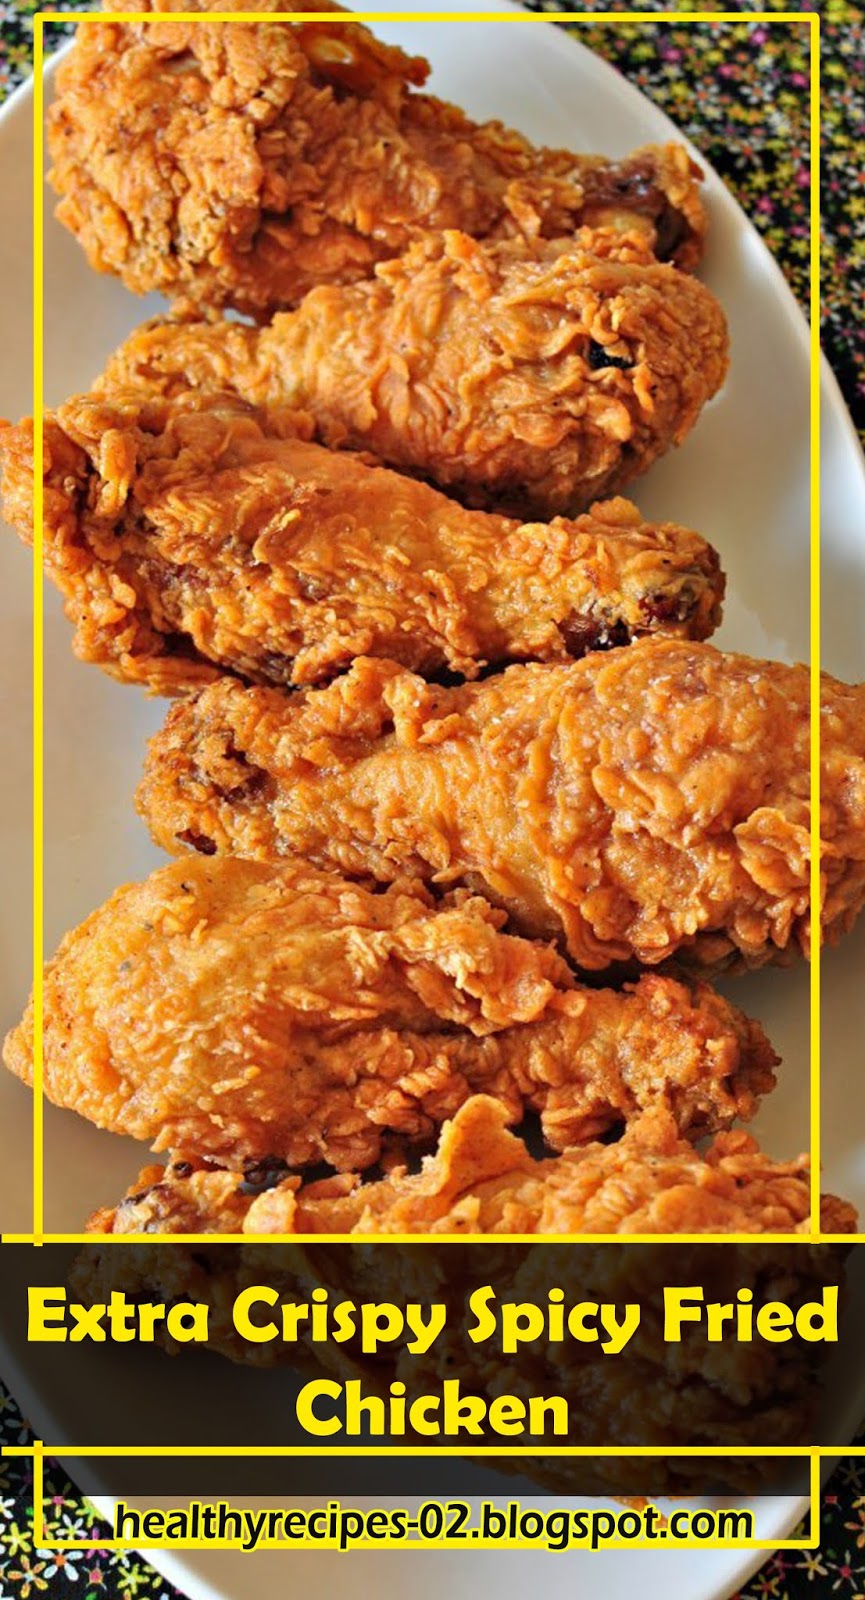 BEST RECIPES-Extra Crispy Spicy Fried Chicken | Healthyrecipes-02